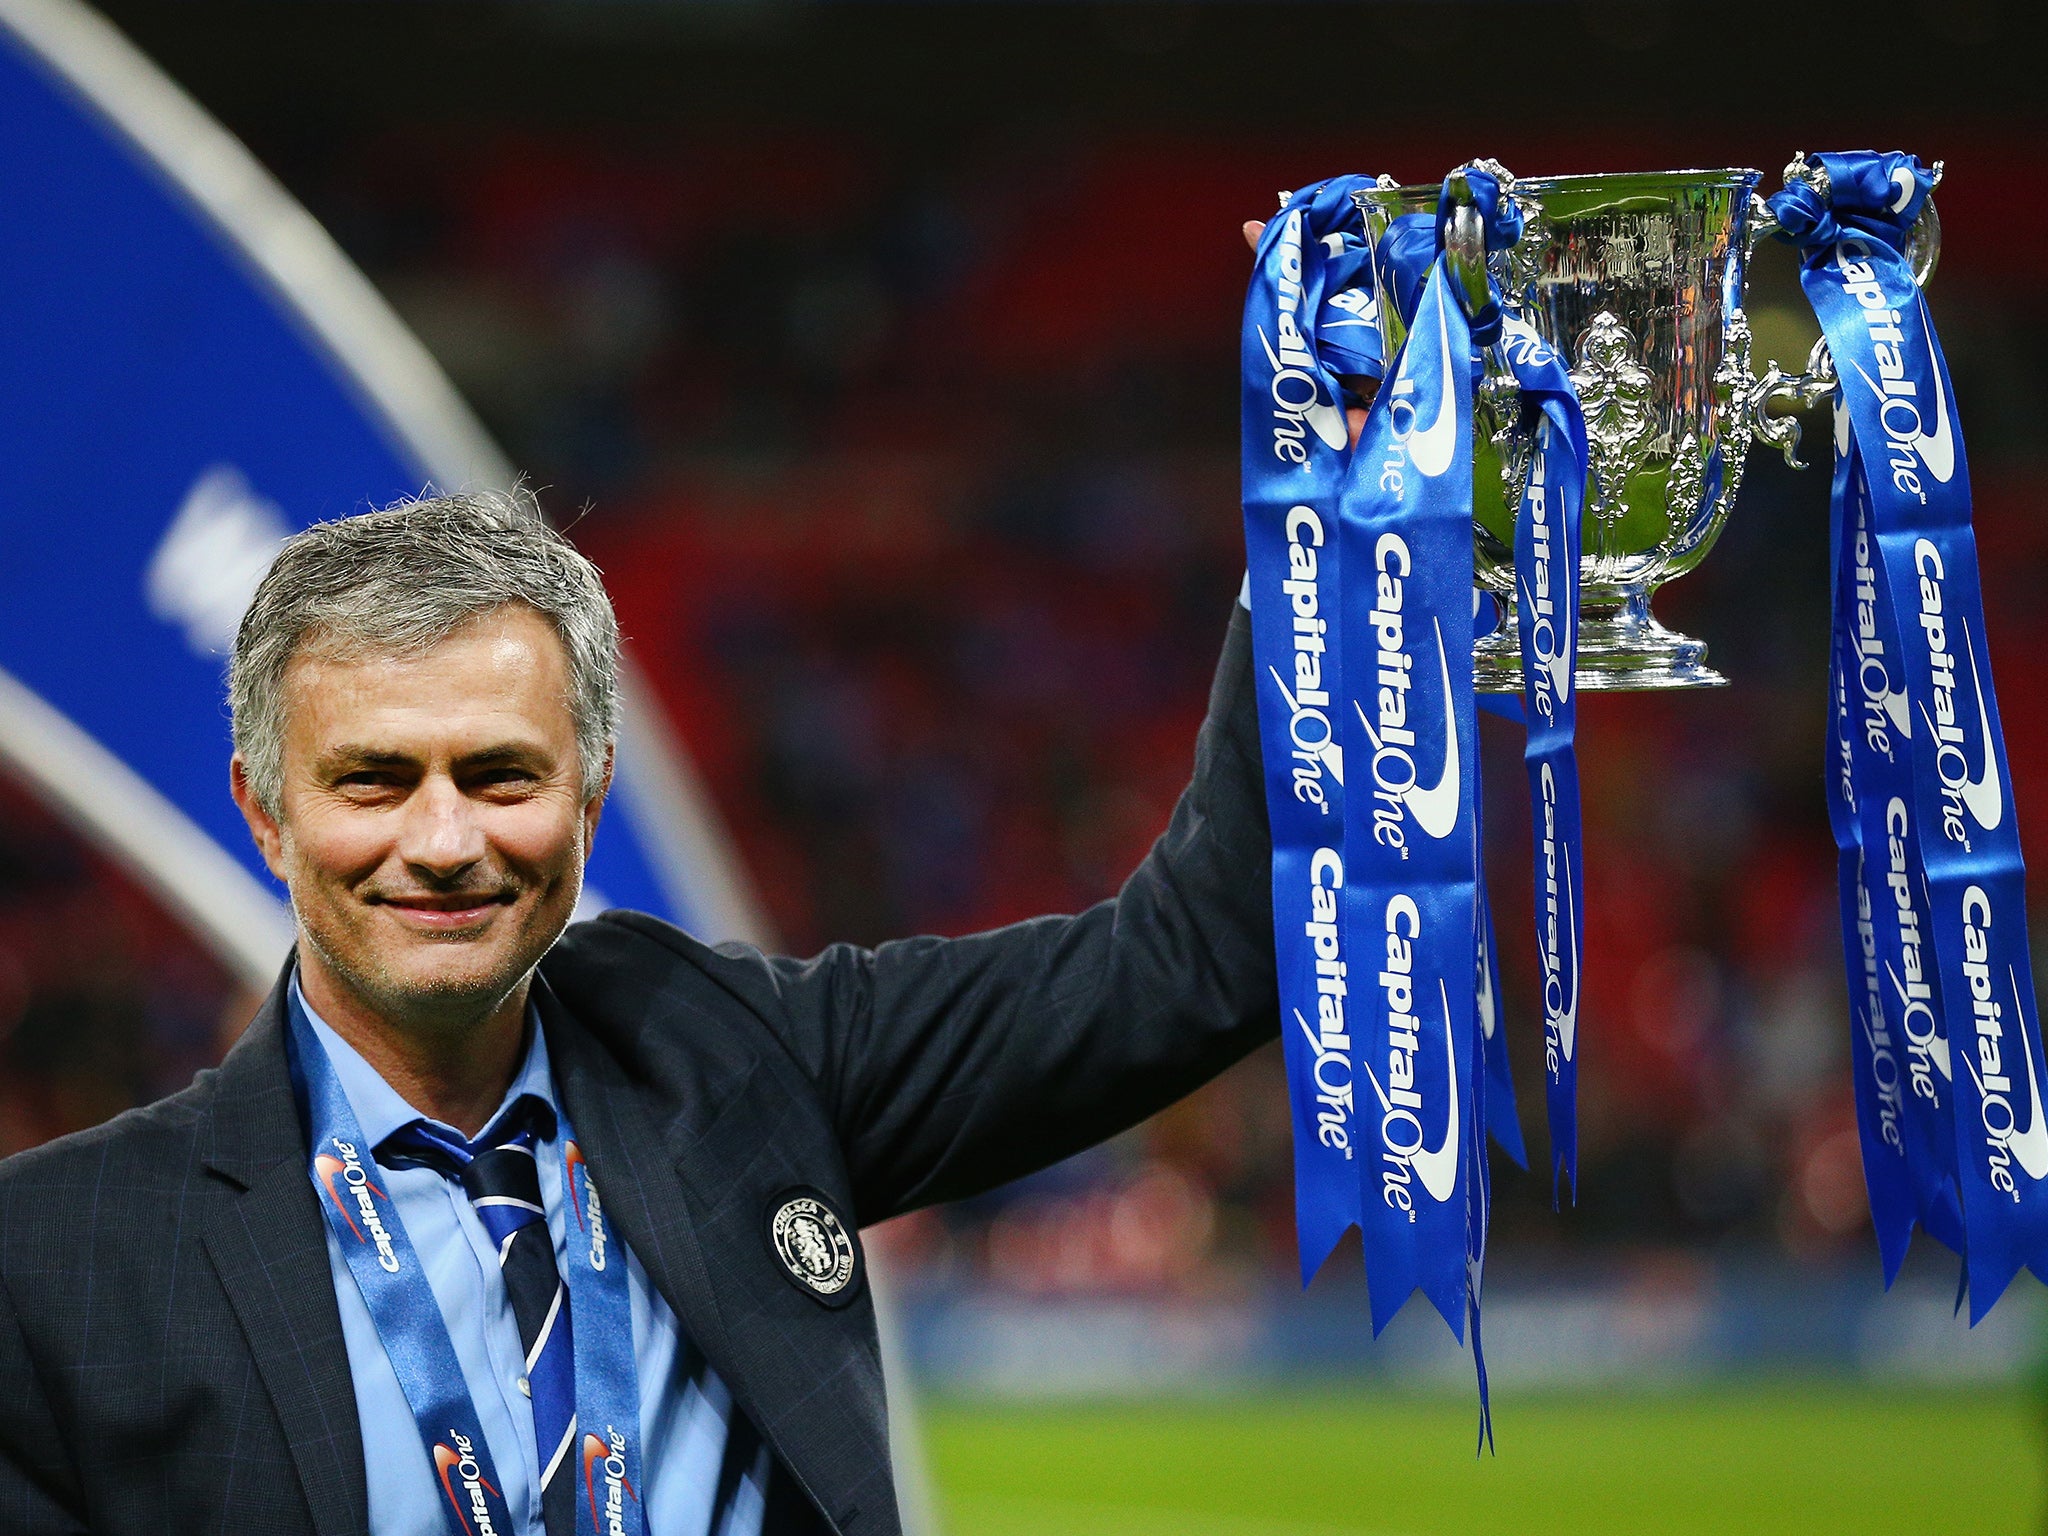 Jose Mourinho lifts the League Cup trophy last season